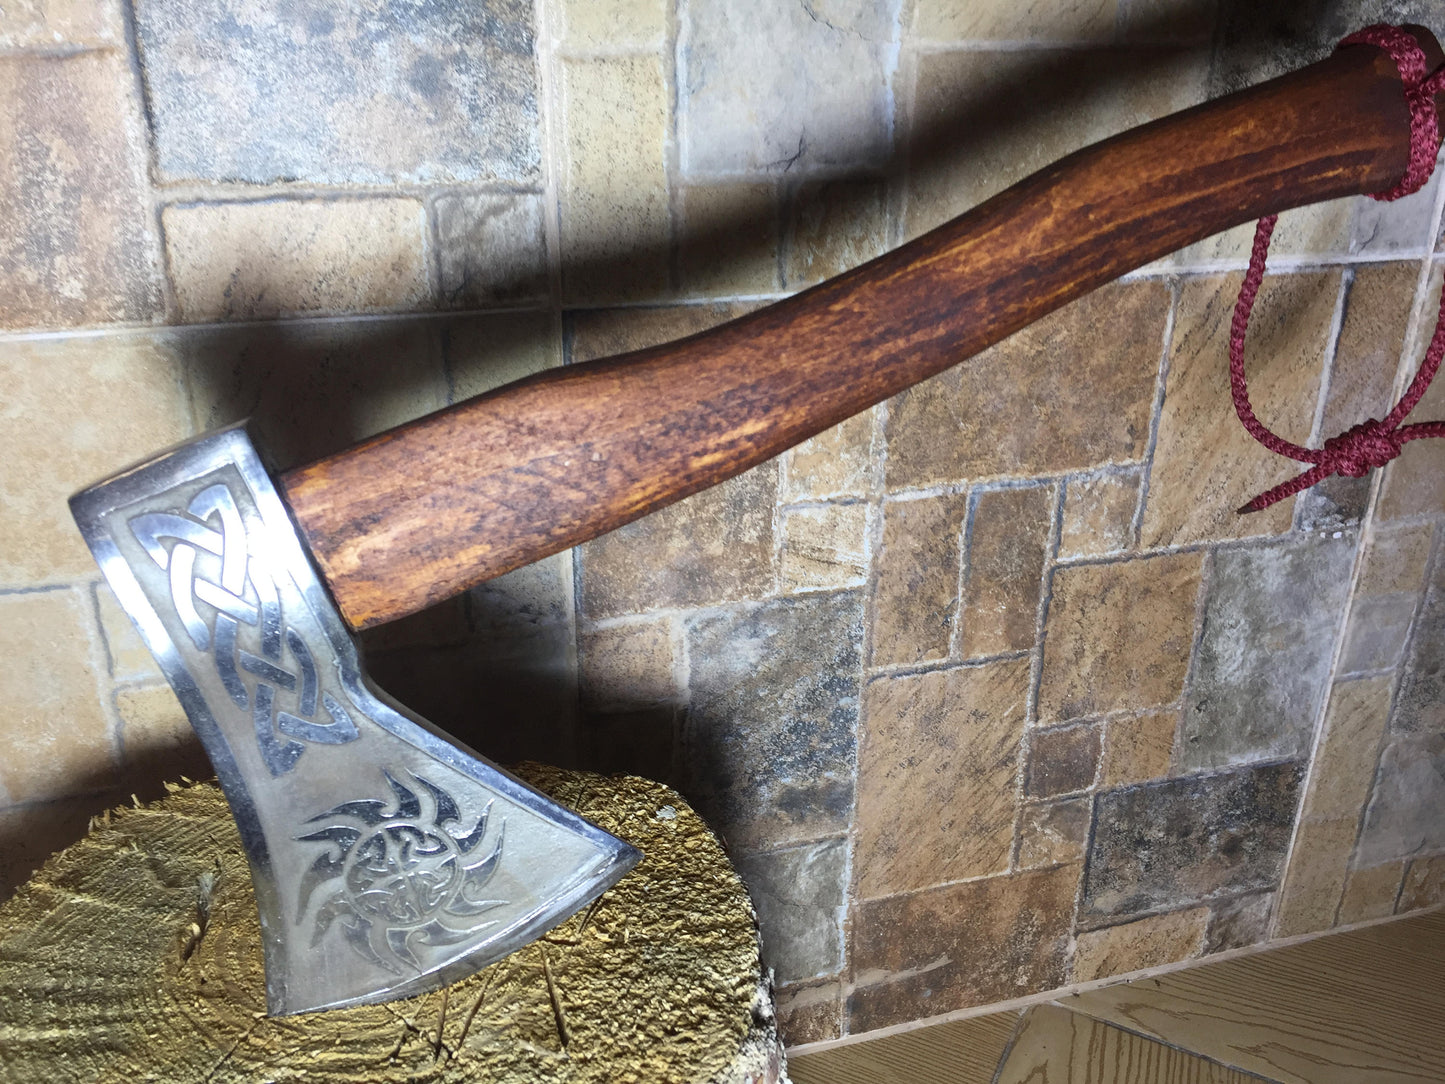 Viking axe, mens gifts, medieval axe, tomahawk, throwing axe, hatchet, scandinavic axe, viking weaponry, viking gifts, handyman tool, axe